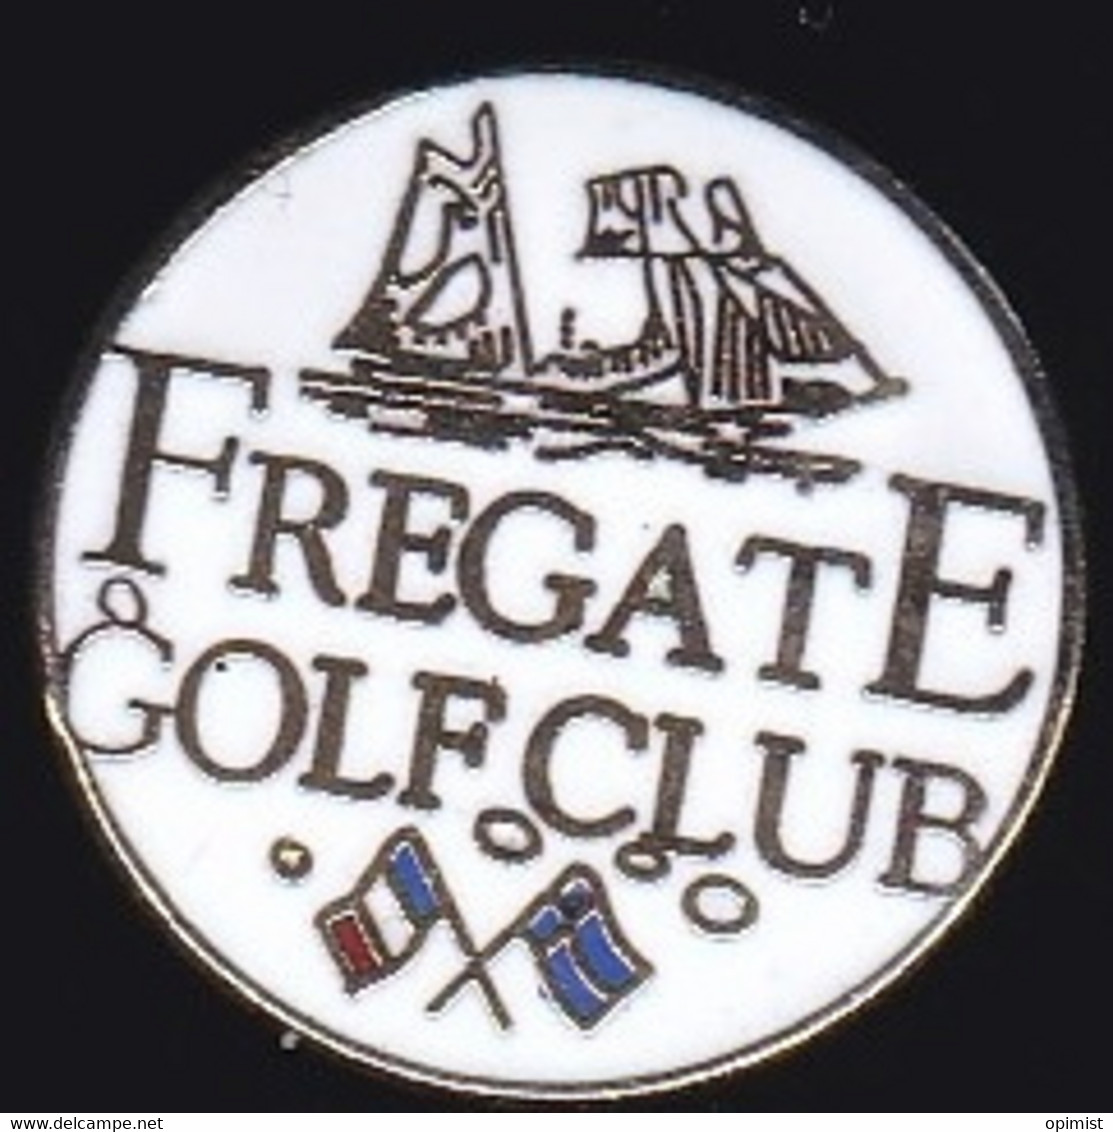 71819- Pin's-dolce Fregate Golf Club à Saint-Cyr-sur-Mer. - Golf